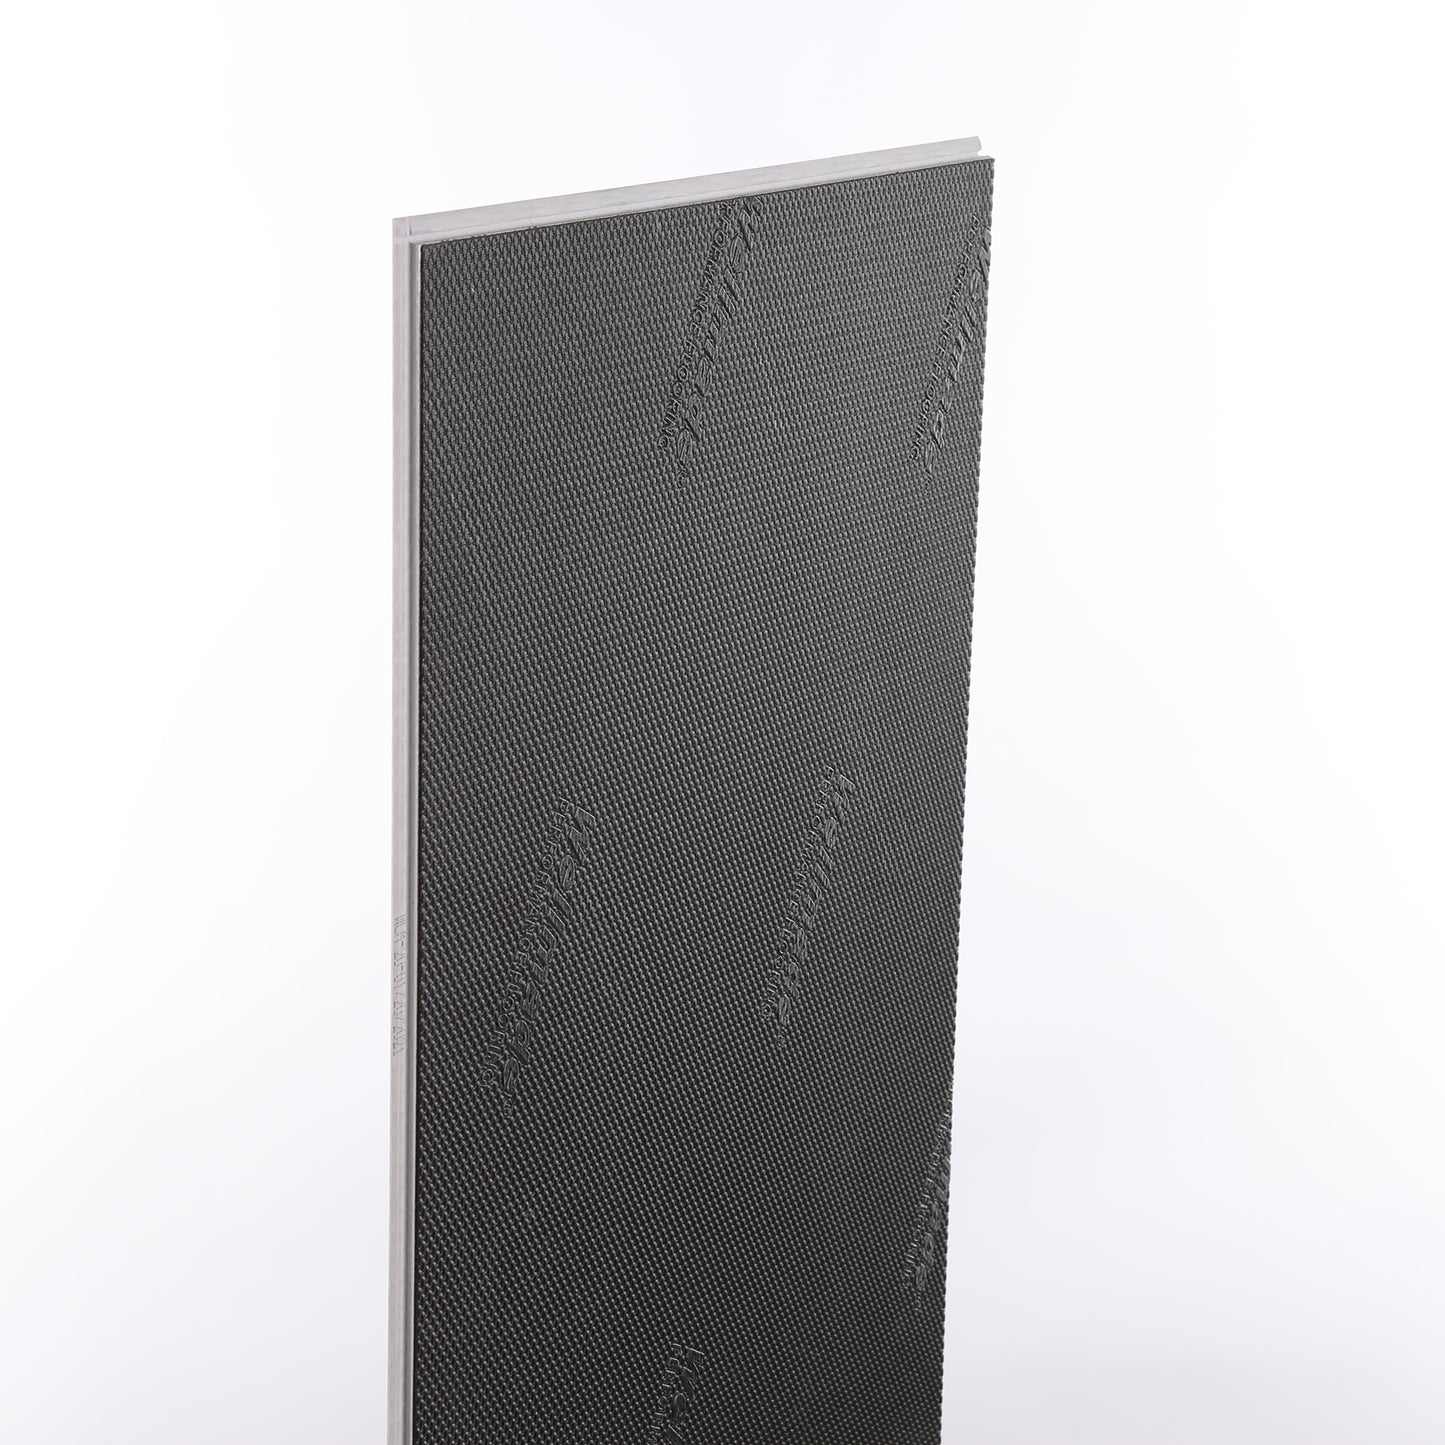 6mm Vatican Travetine HDPC® Waterproof Luxury Vinyl Tile Flooring 12 in. Wide x 24 in. Long